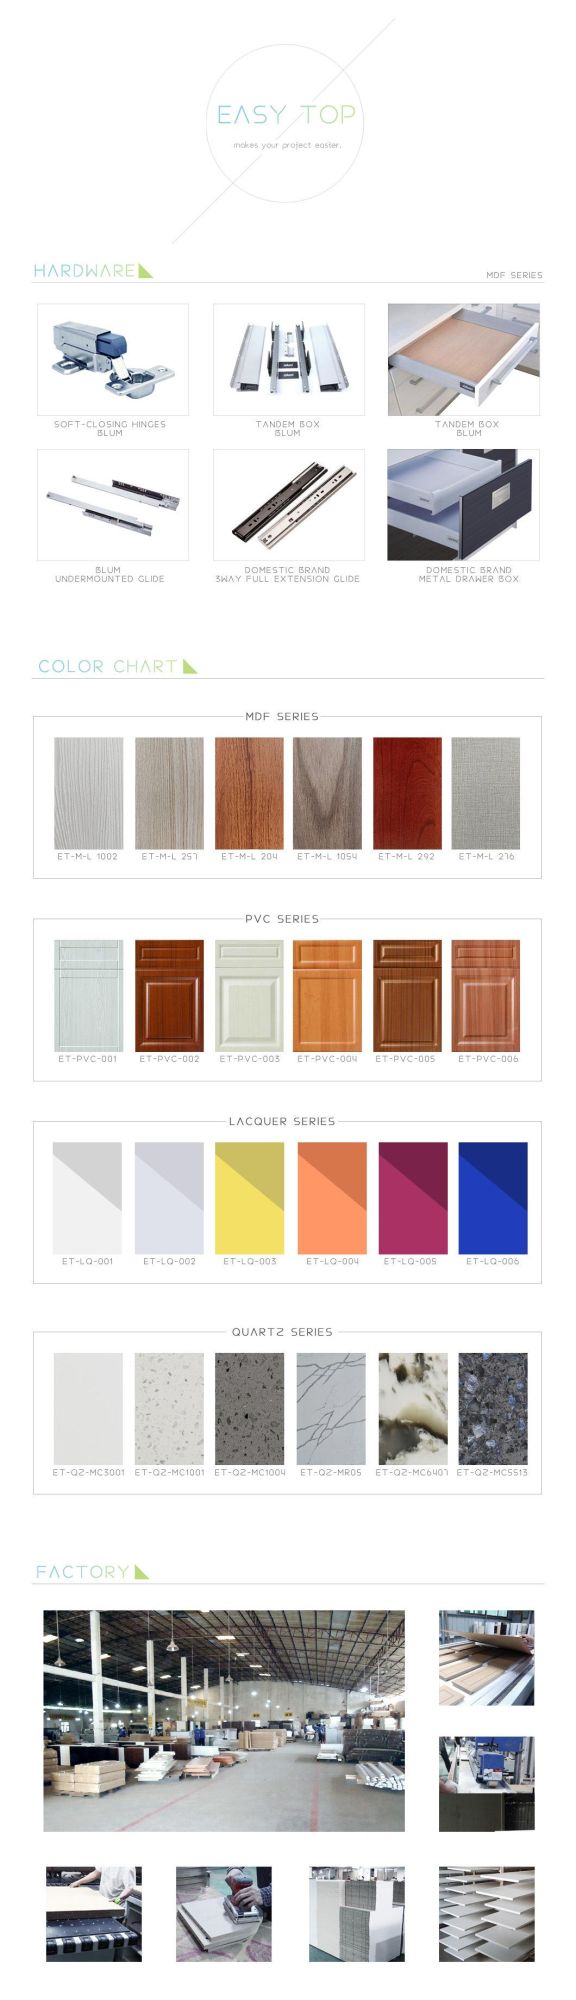 L-Shaped New Design Window Splashback Tiers Display Shelf Kitchen Cabinets